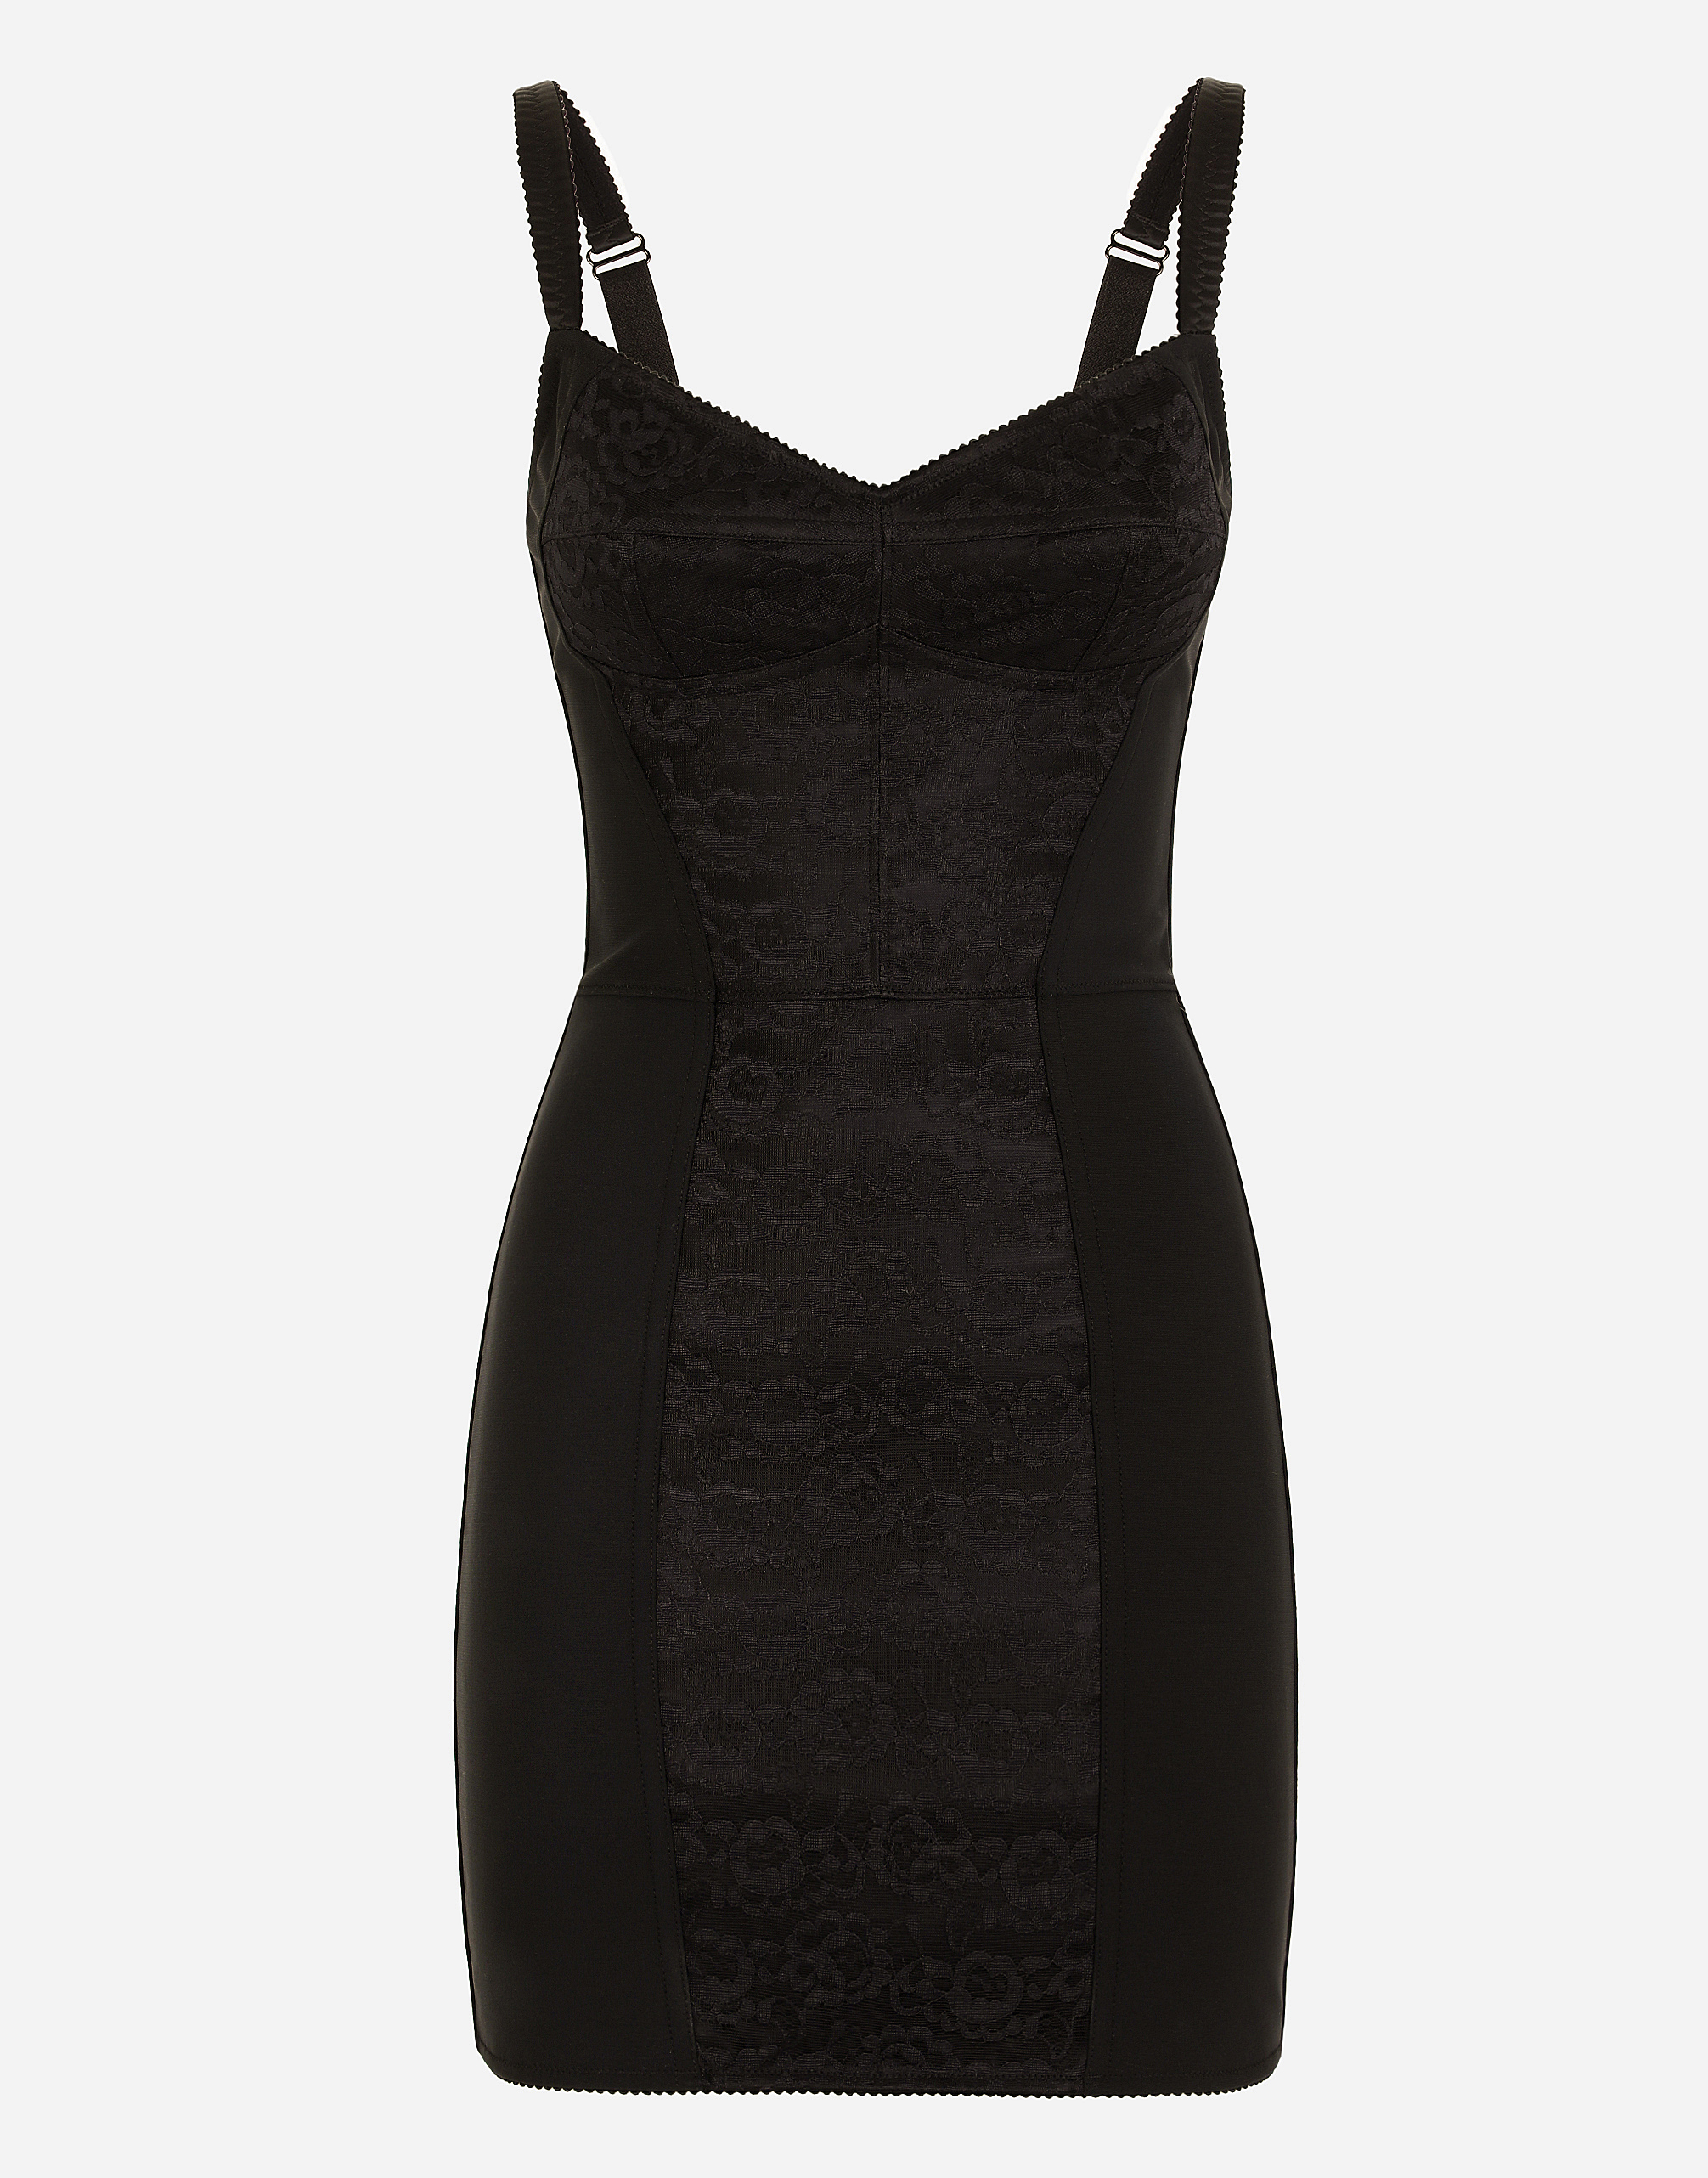 Corset-style slip dress in Black